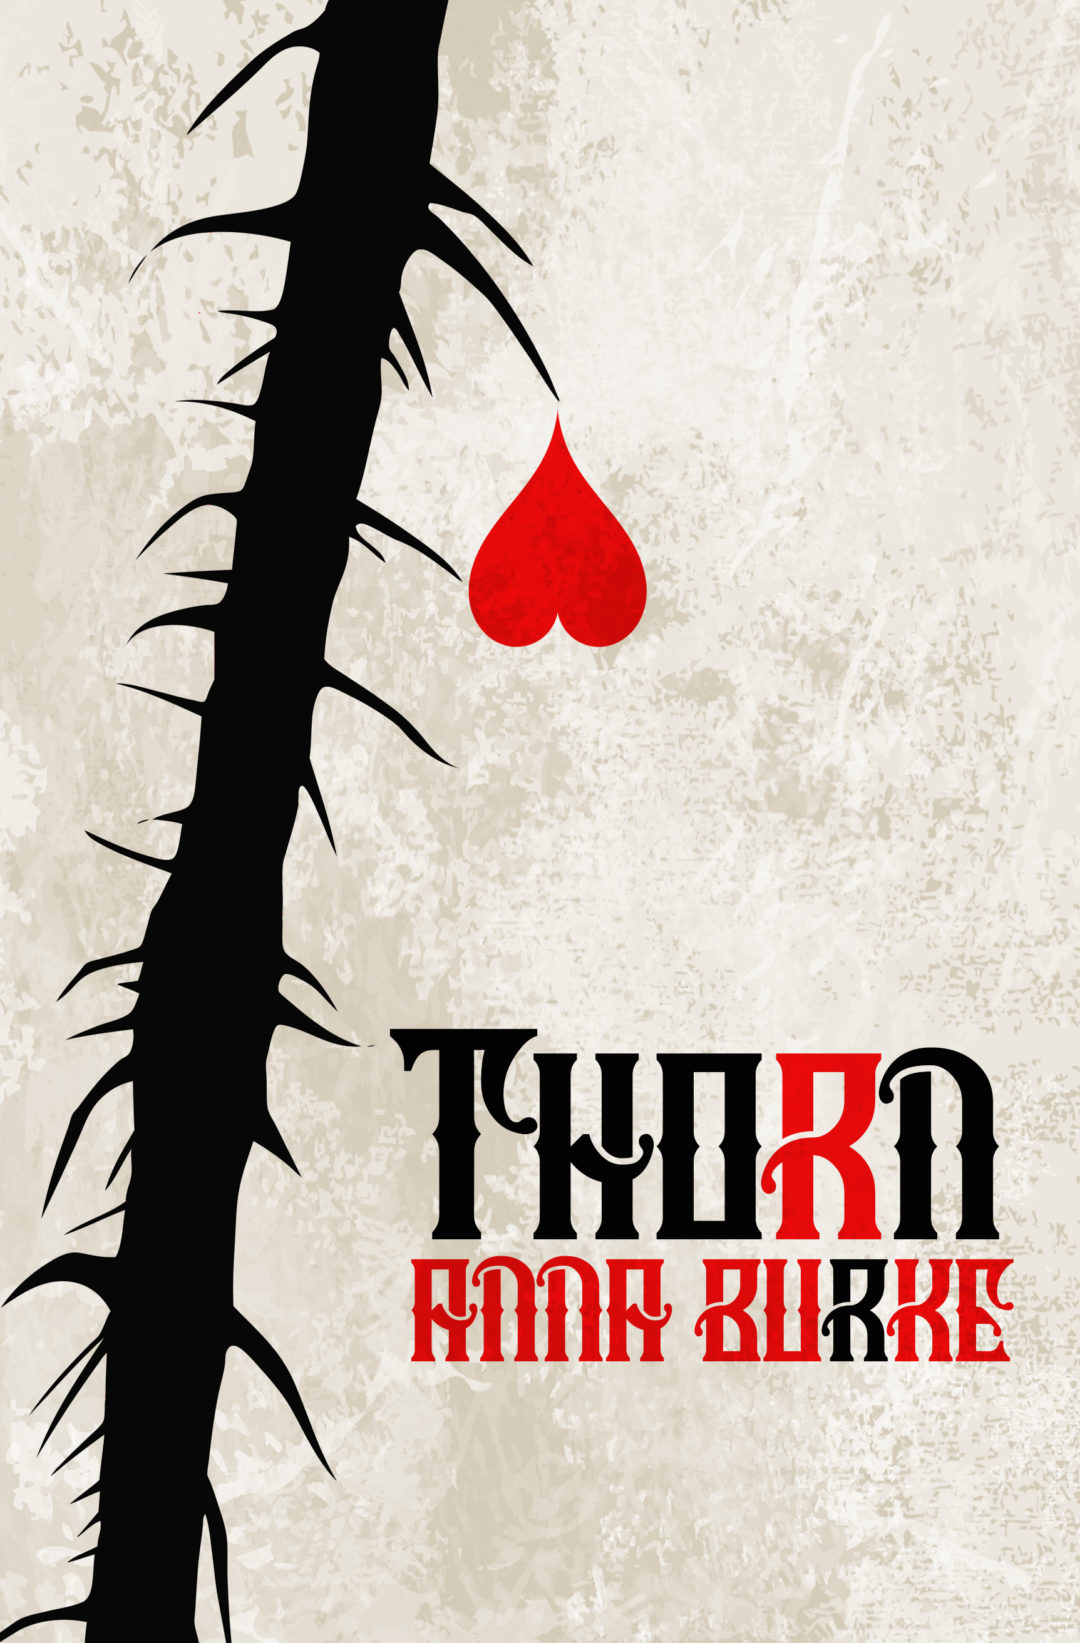 Thorn by Anna Burke